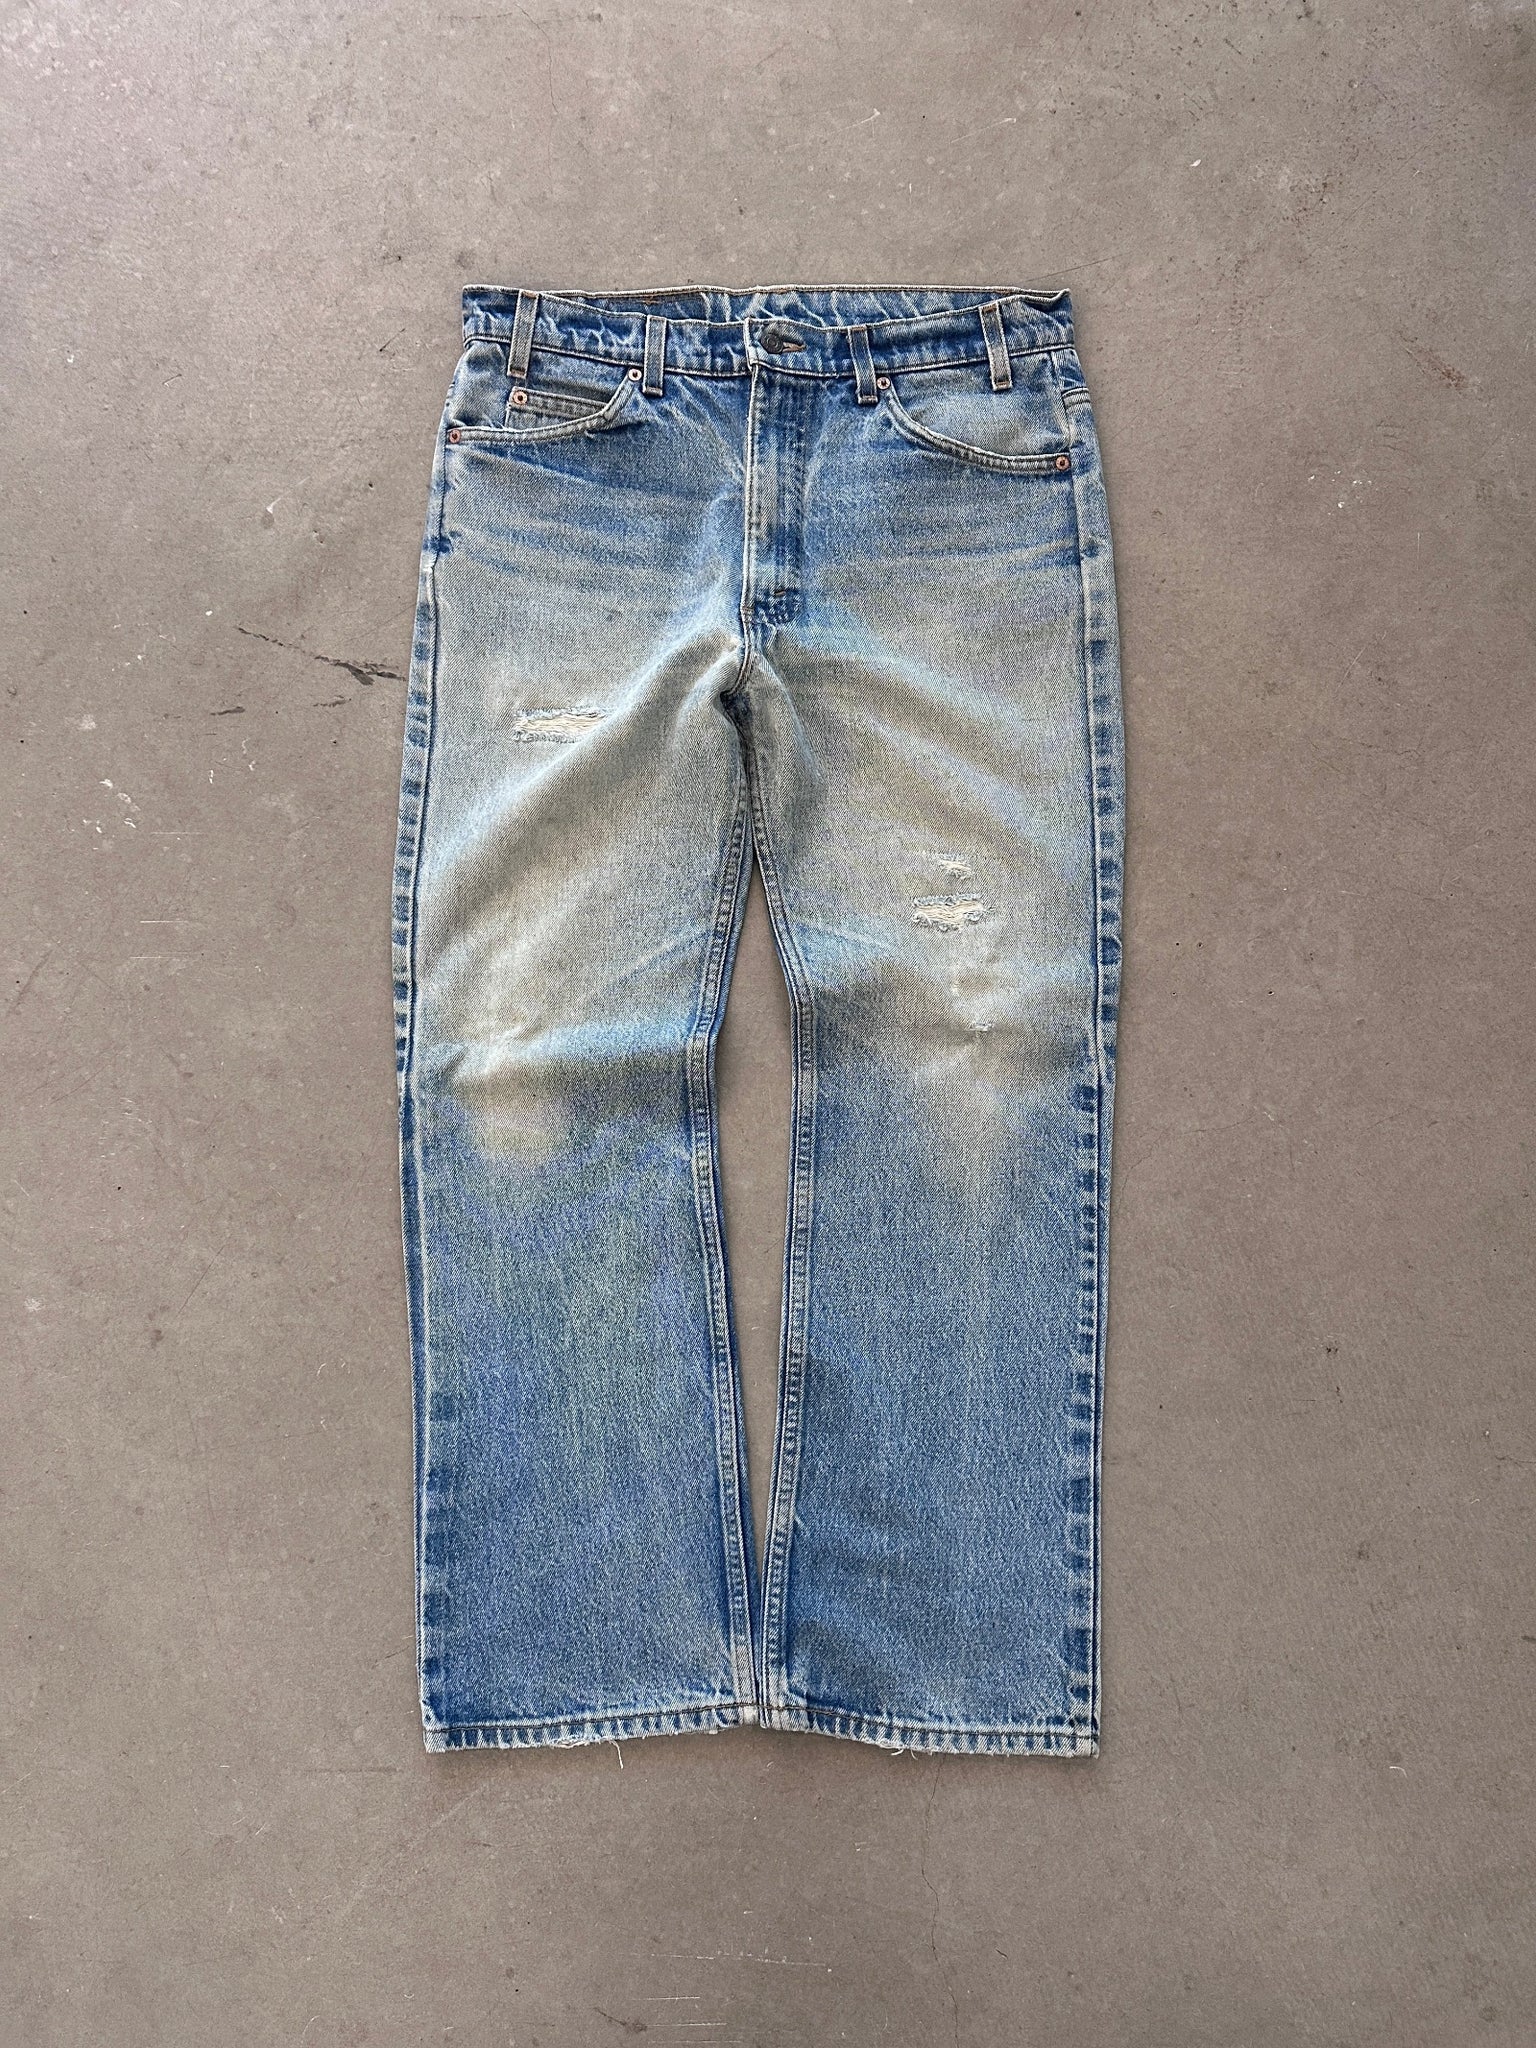 1997 Levis 517 Orange Tab Jeans - 35 x 30